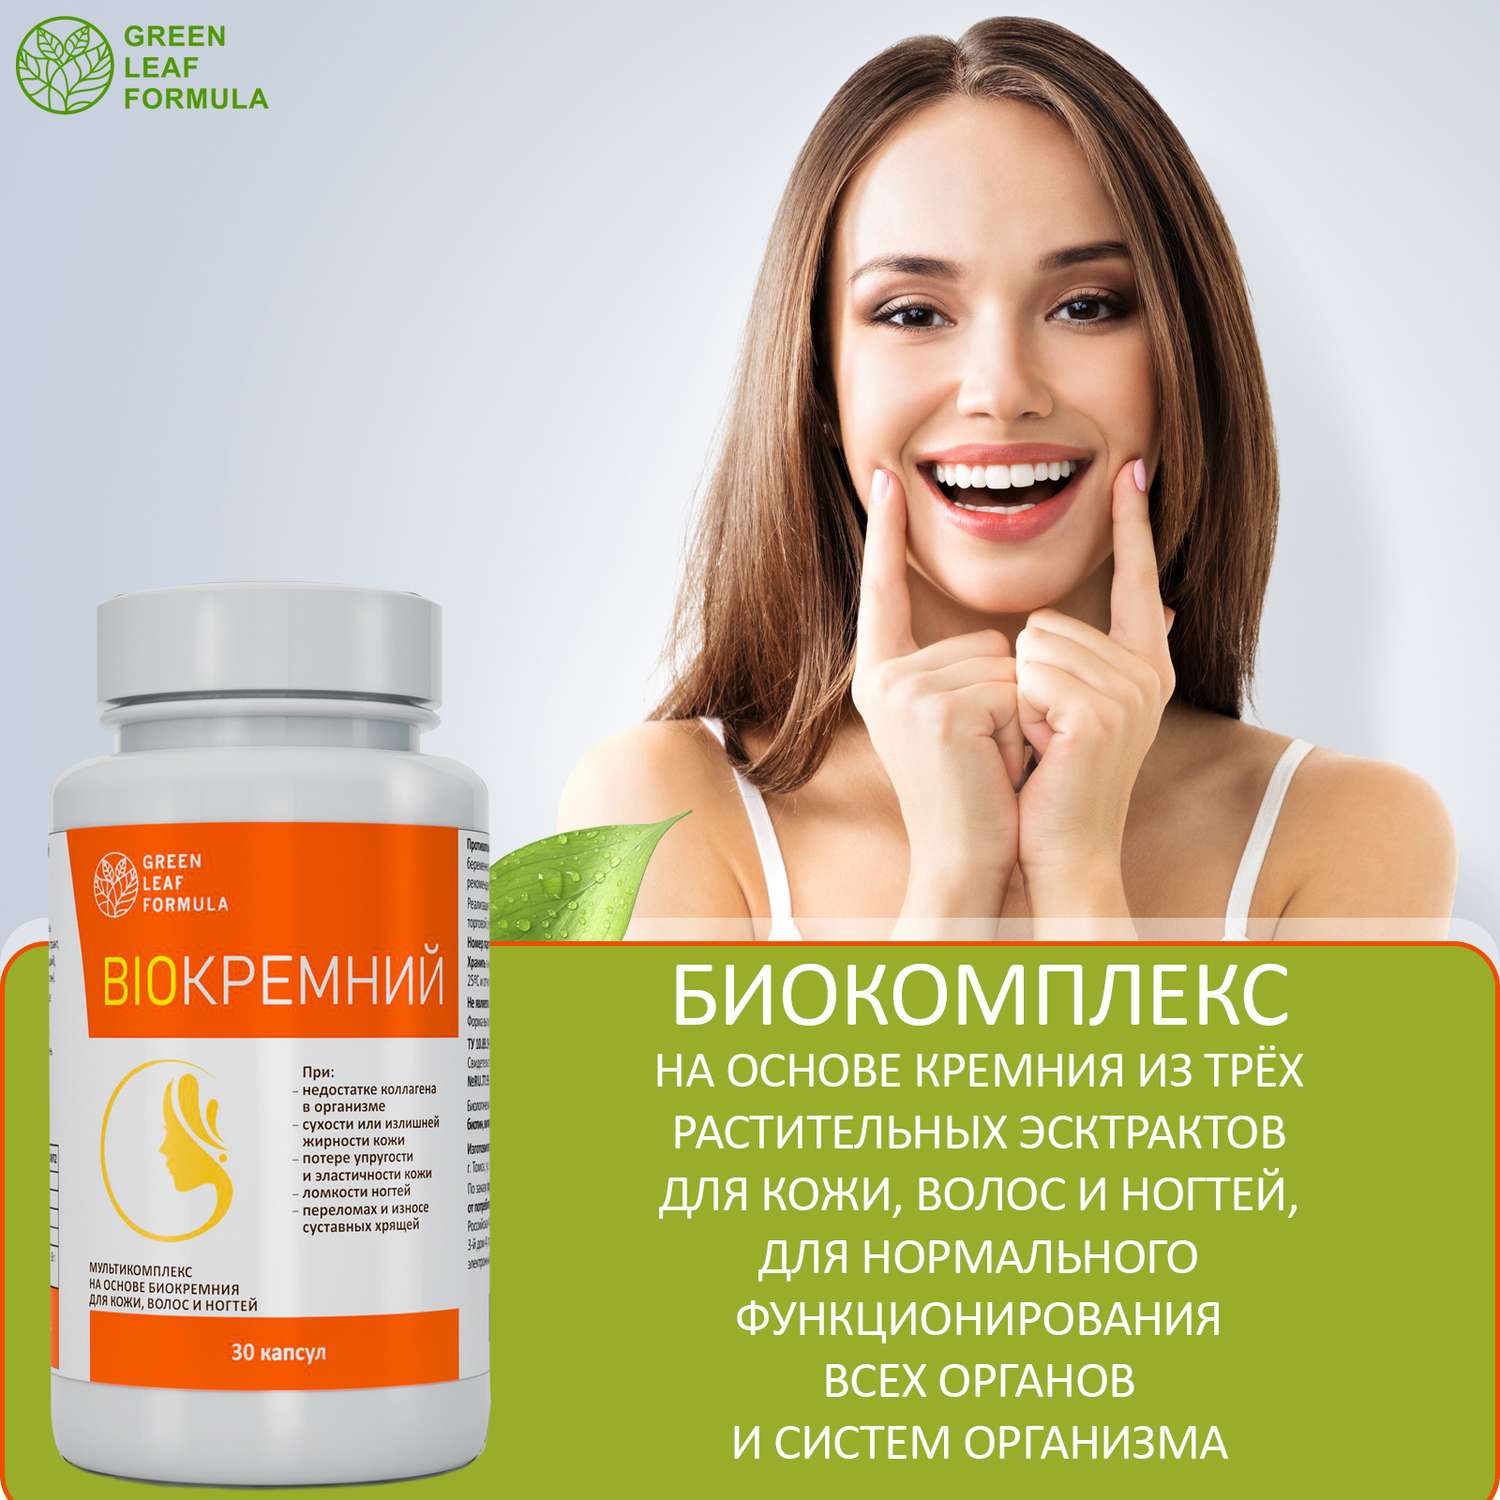 Биокремний Green Leaf Formula витамины для кожи для волос и ногтей для суставов 30 капсул - фото 5